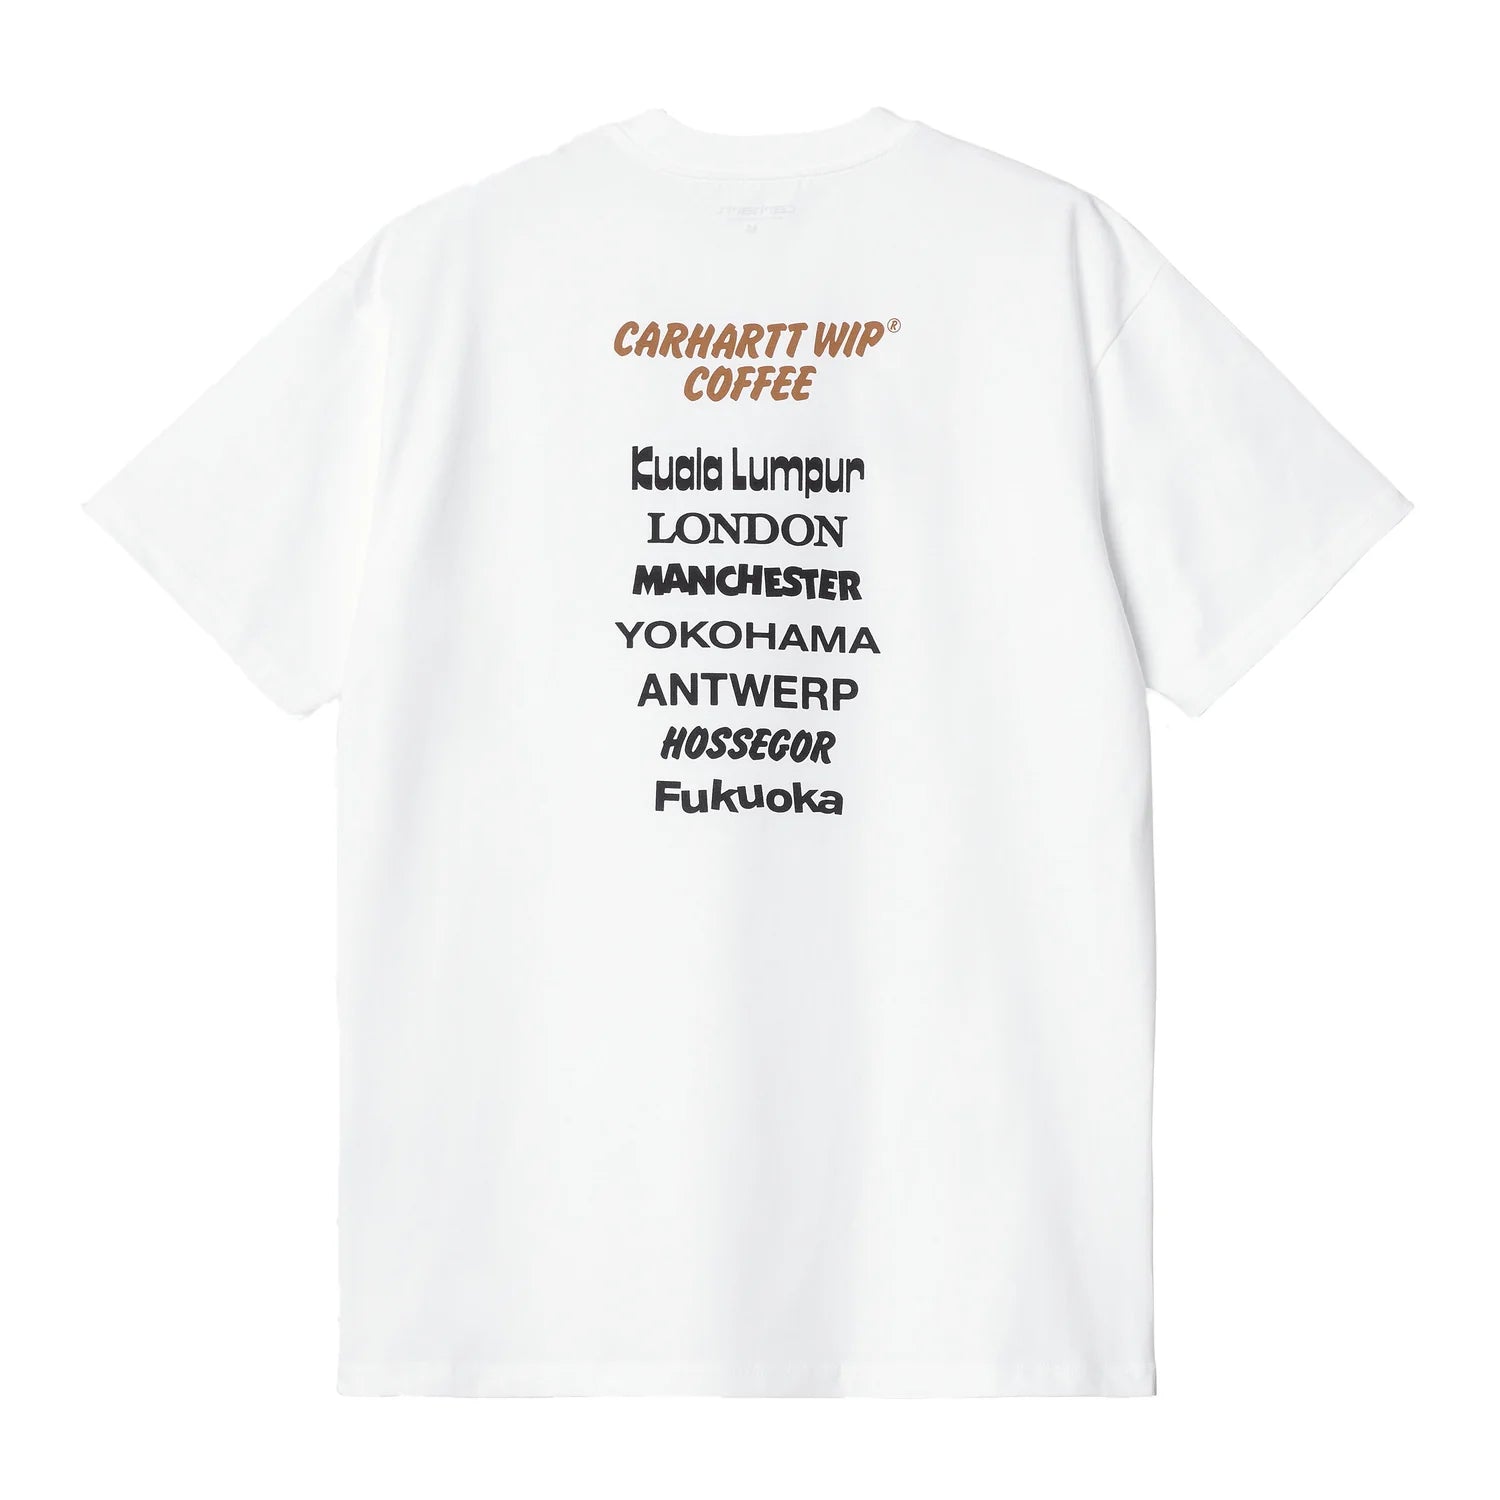 W S/S Carhartt Wip Coffee T-shirt - White